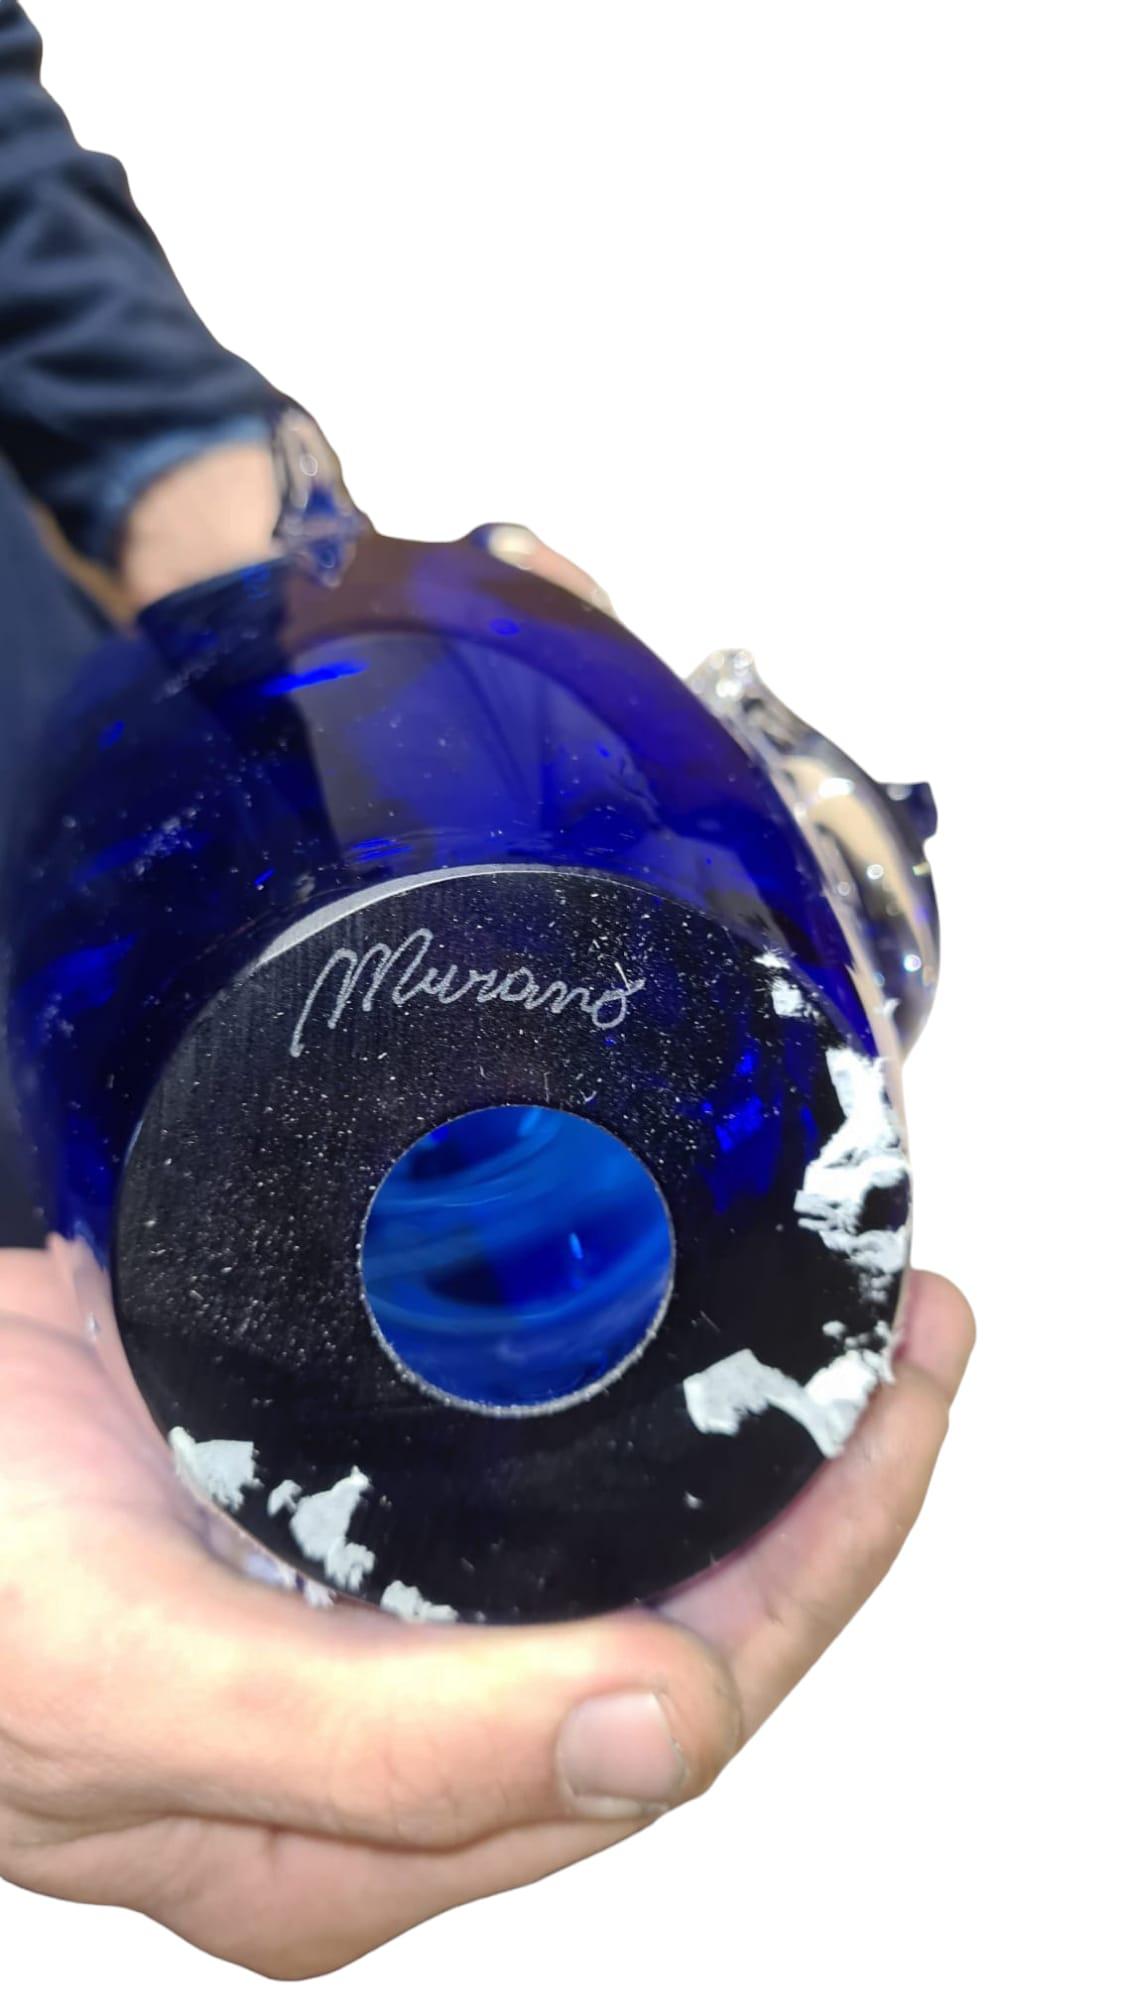 Beautiful Murano blown glass sculpture in sapphire blue glass handmade by Murano masters